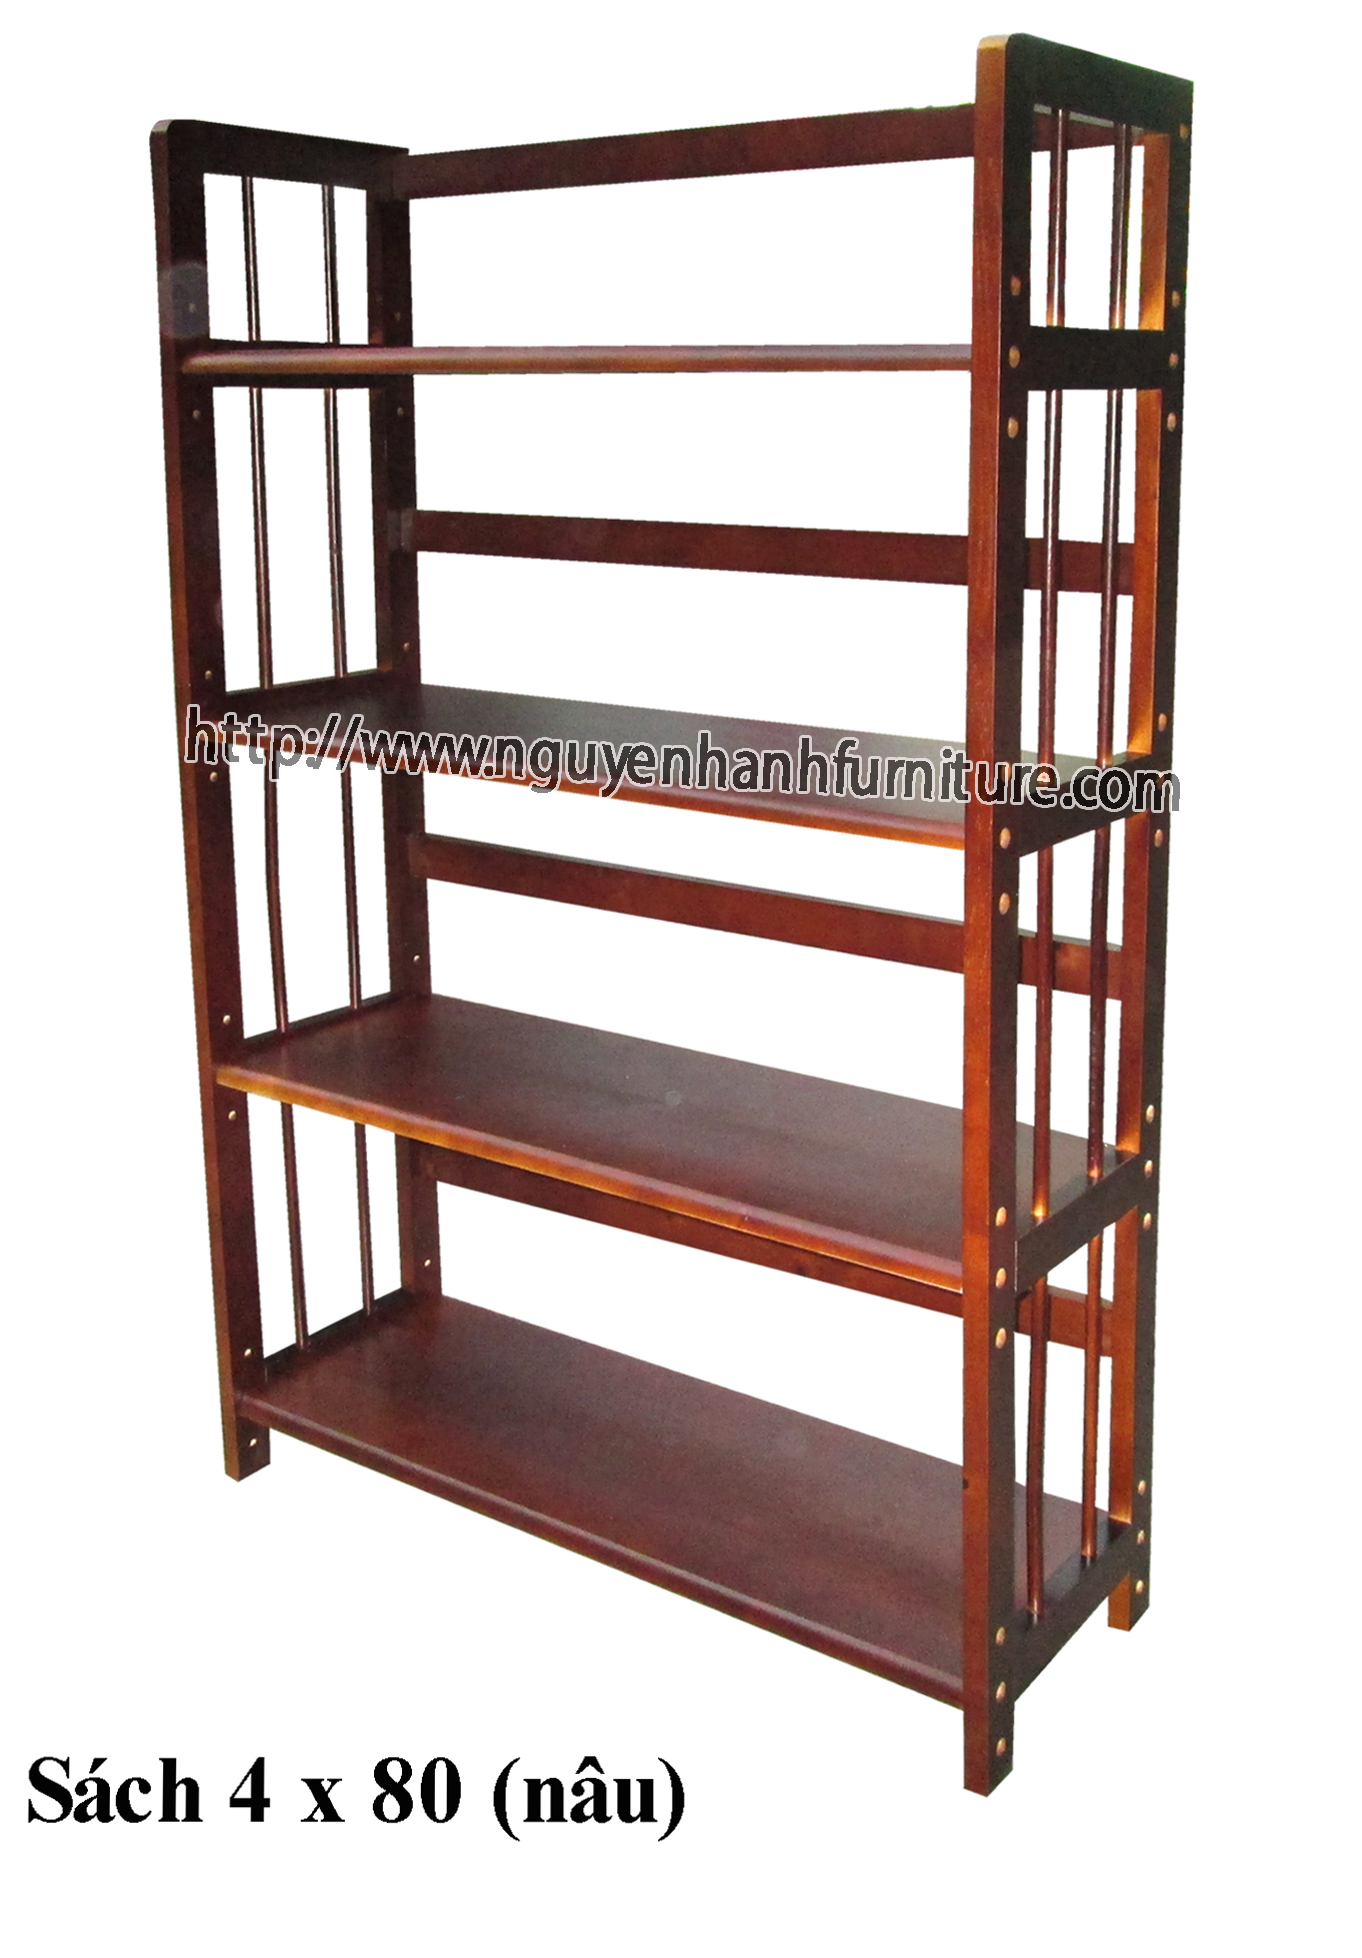 Name product: 4 storey Adjustable Bookshelf 80 (Brown) - Dimensions: 80 x 28 x 120 (H) - Description: Wood natural rubber